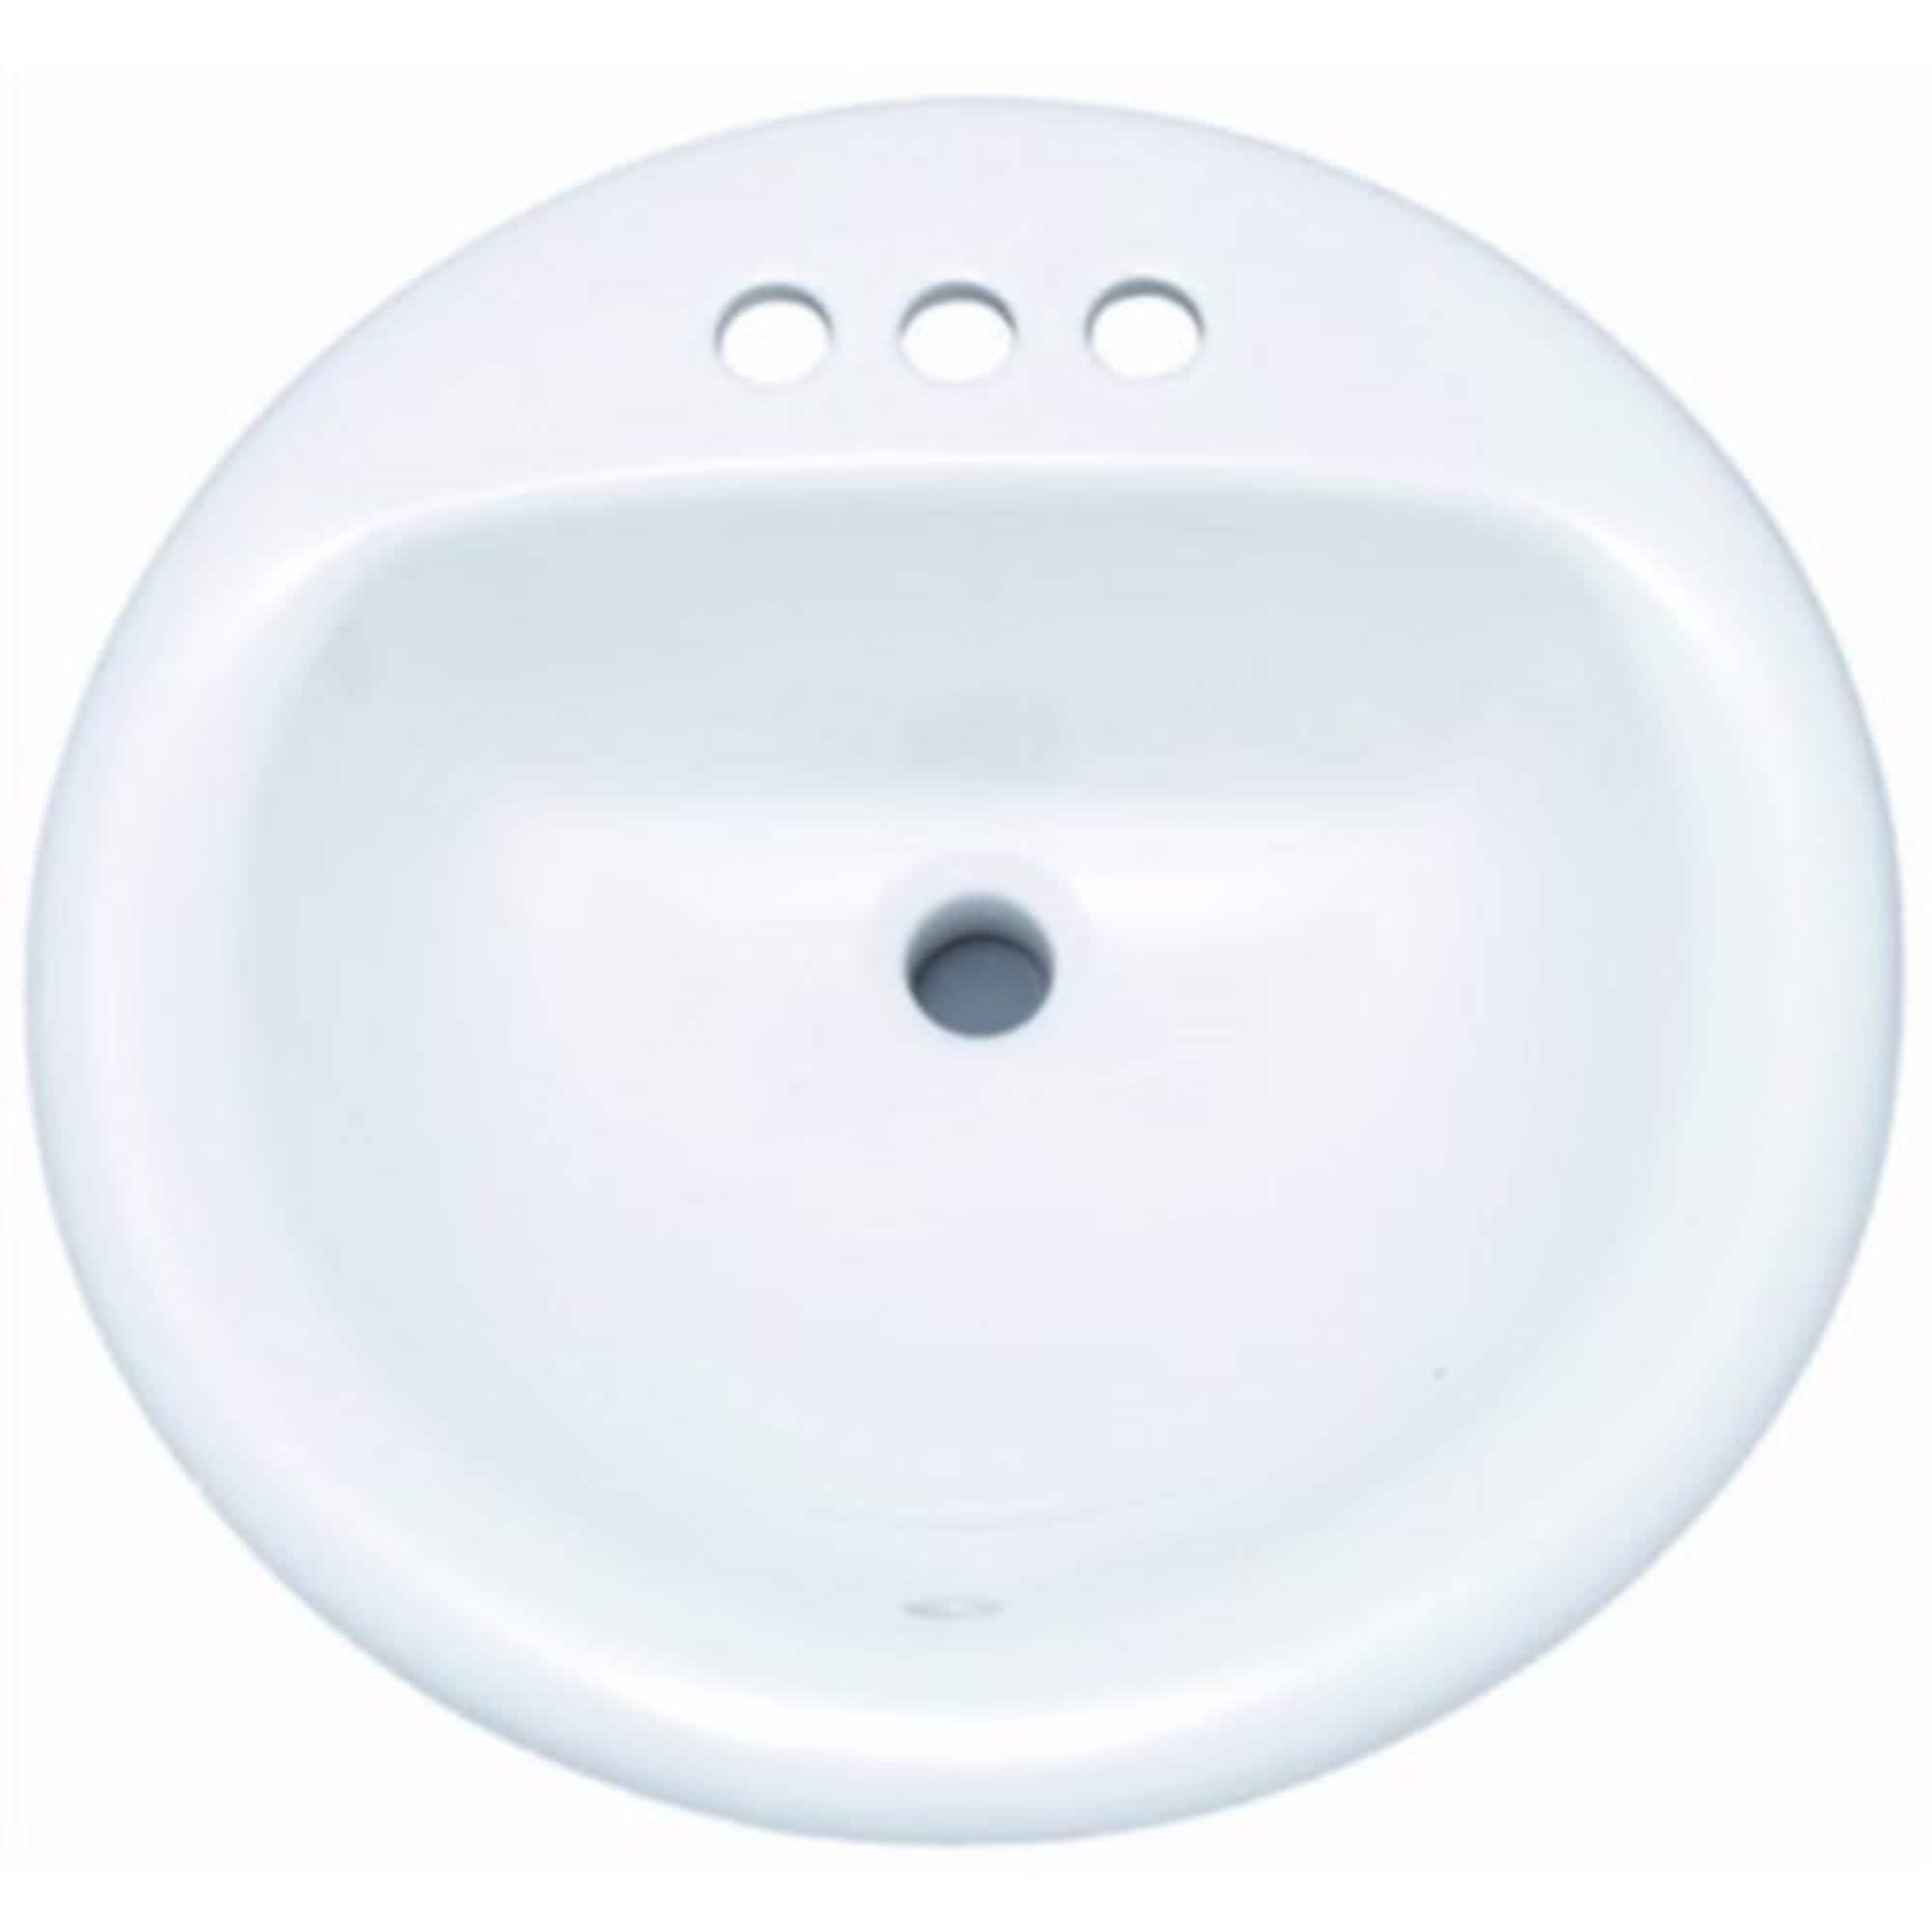 Toilet Bowl Black Gold LV Luxury Gloss Toilet Bowl Lavatory Bathroom  Accessories Equipment